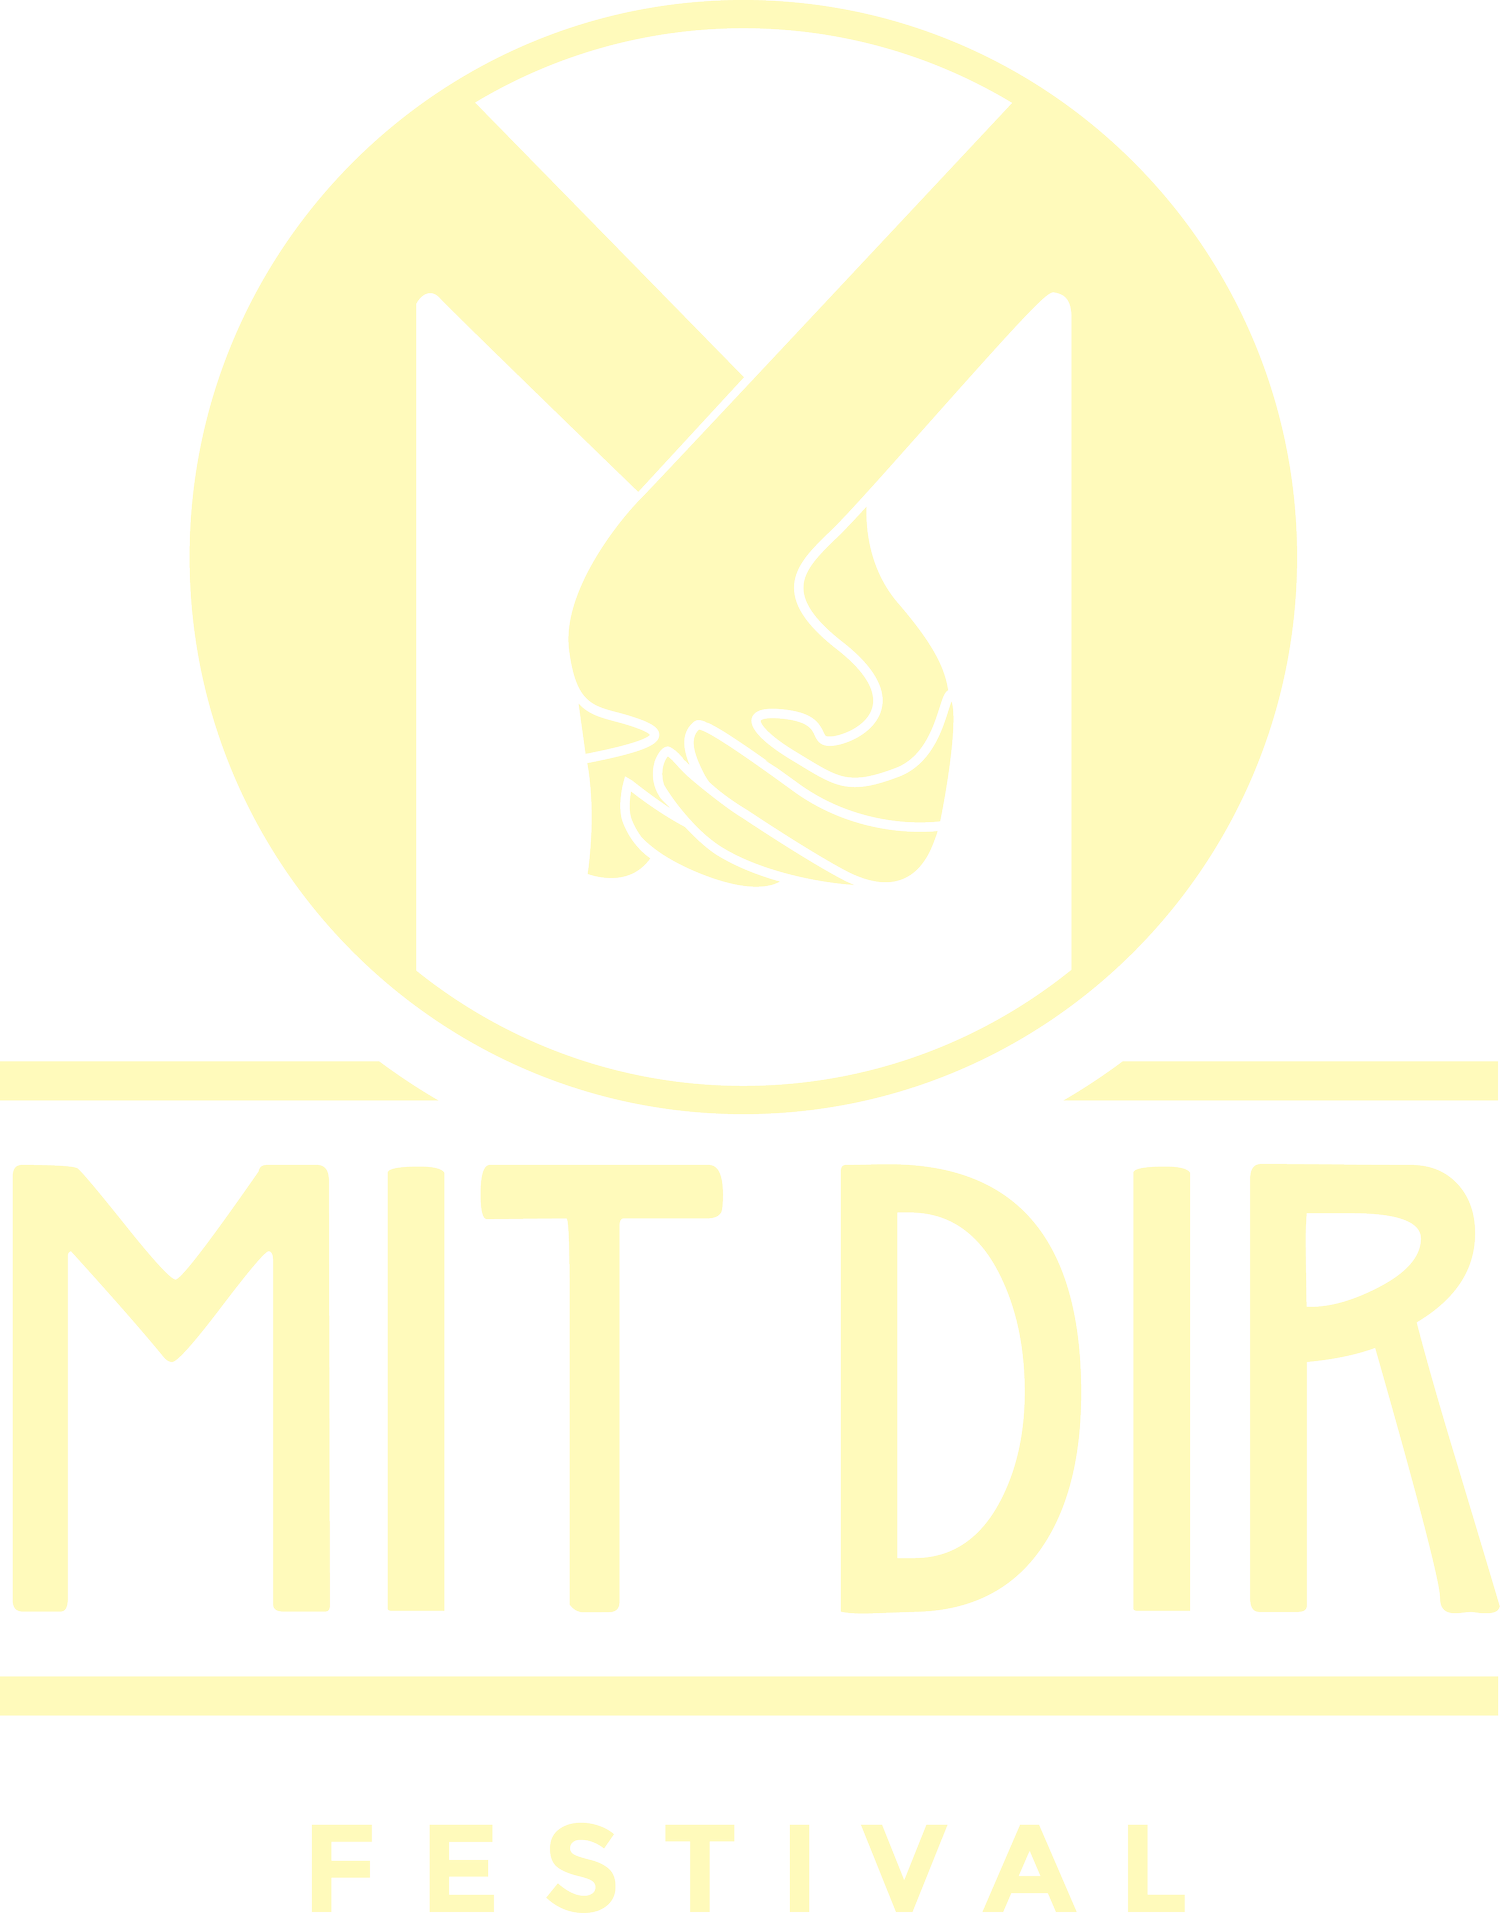 MIT DIR Festival